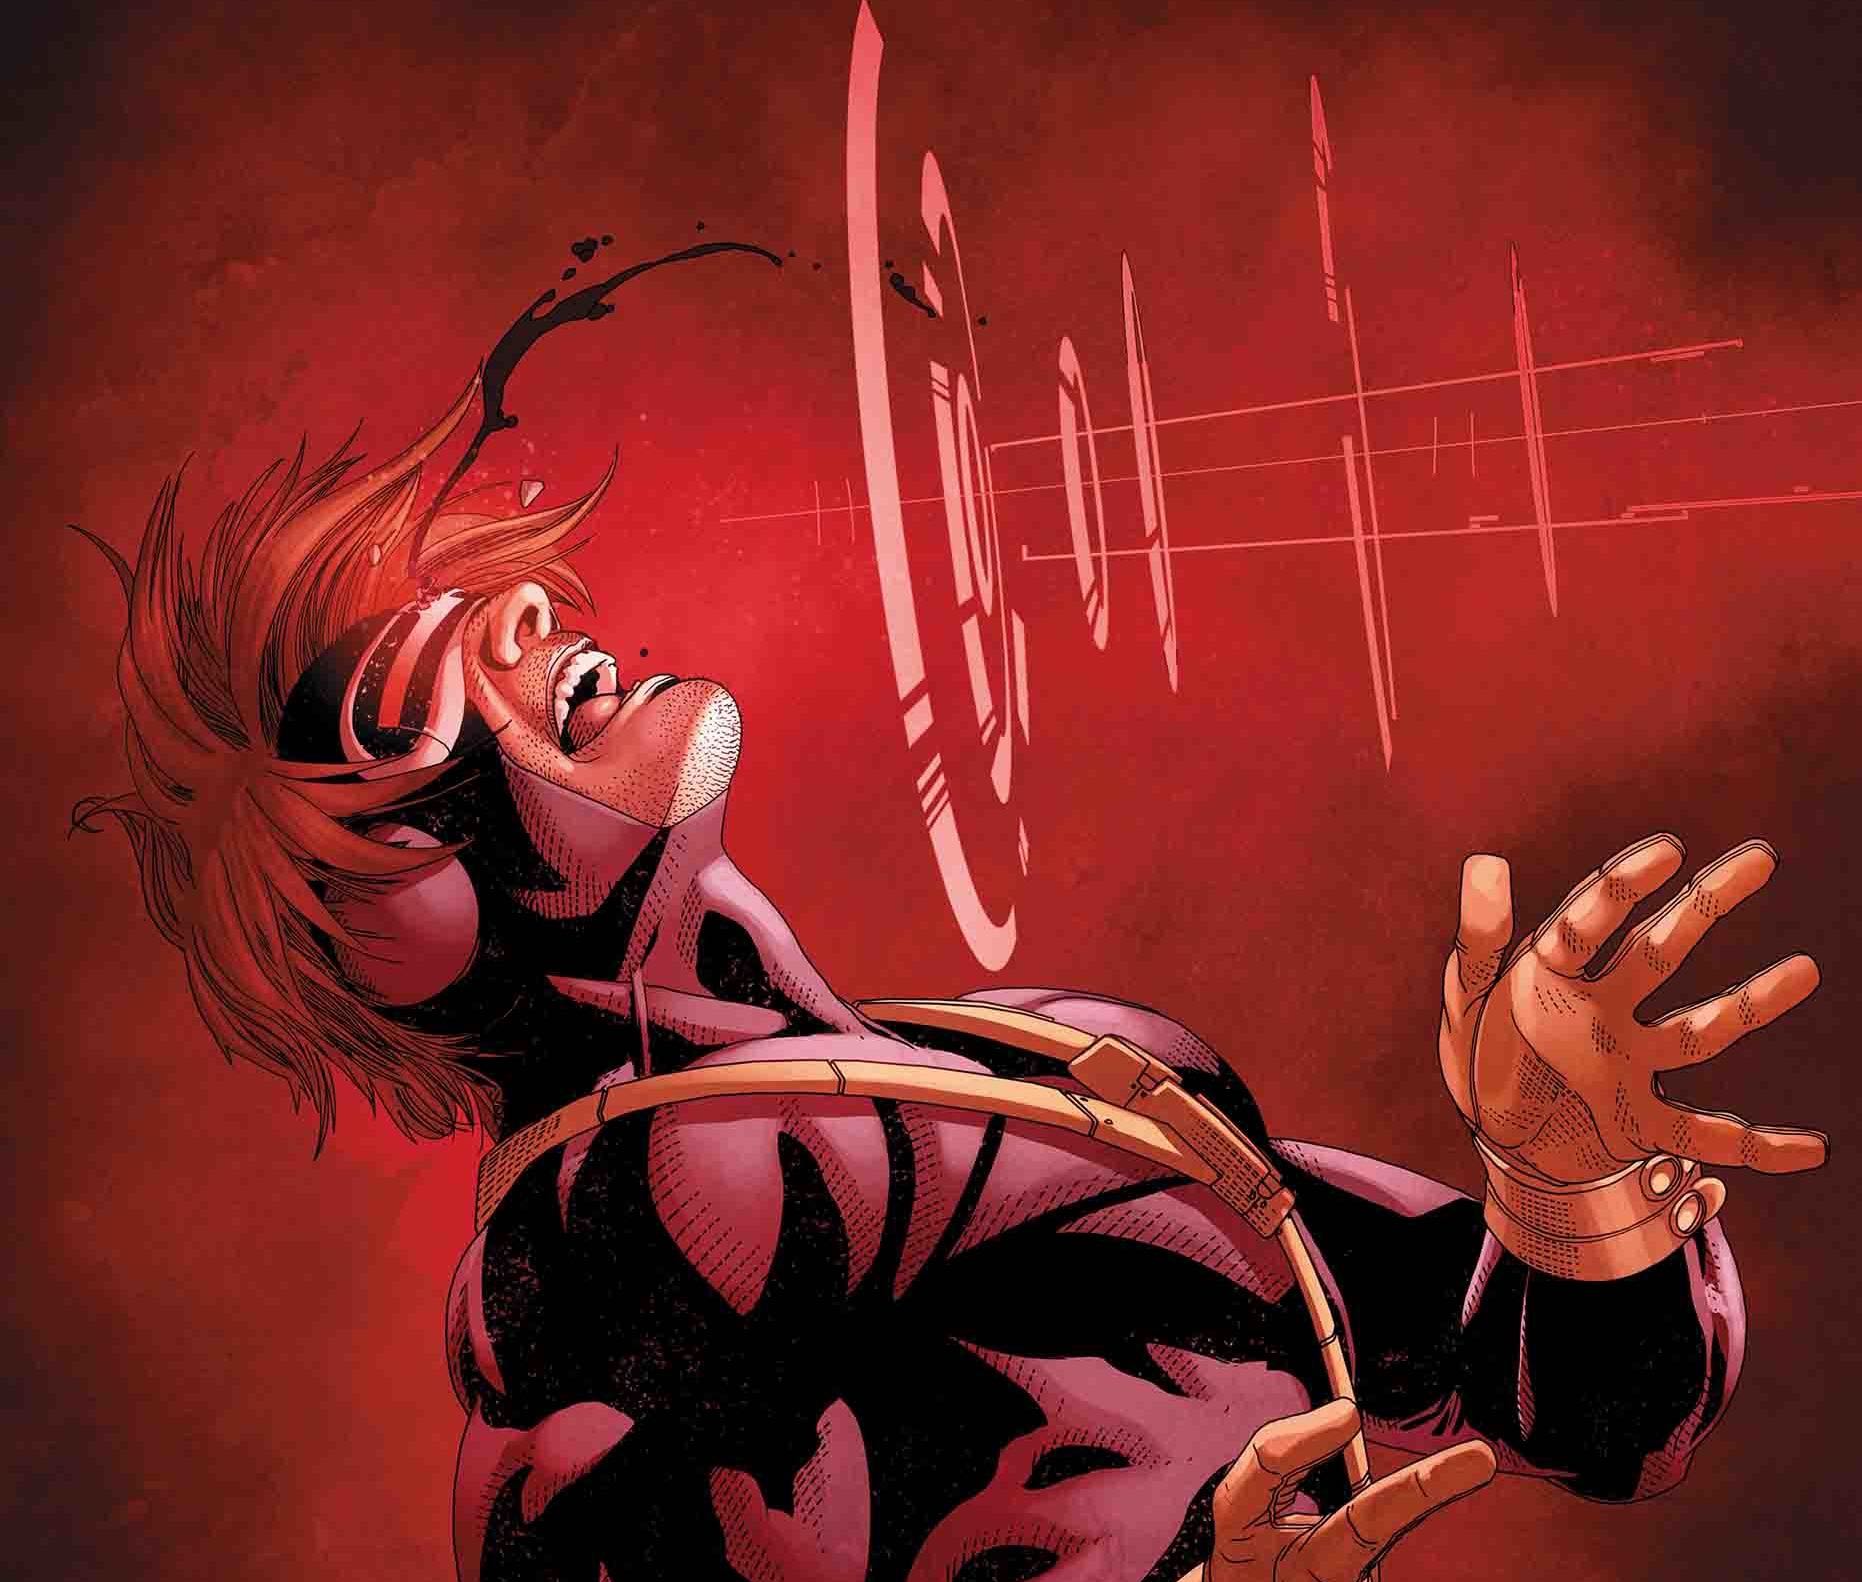 Uncanny X-Men #15 review: Don't trust anybody